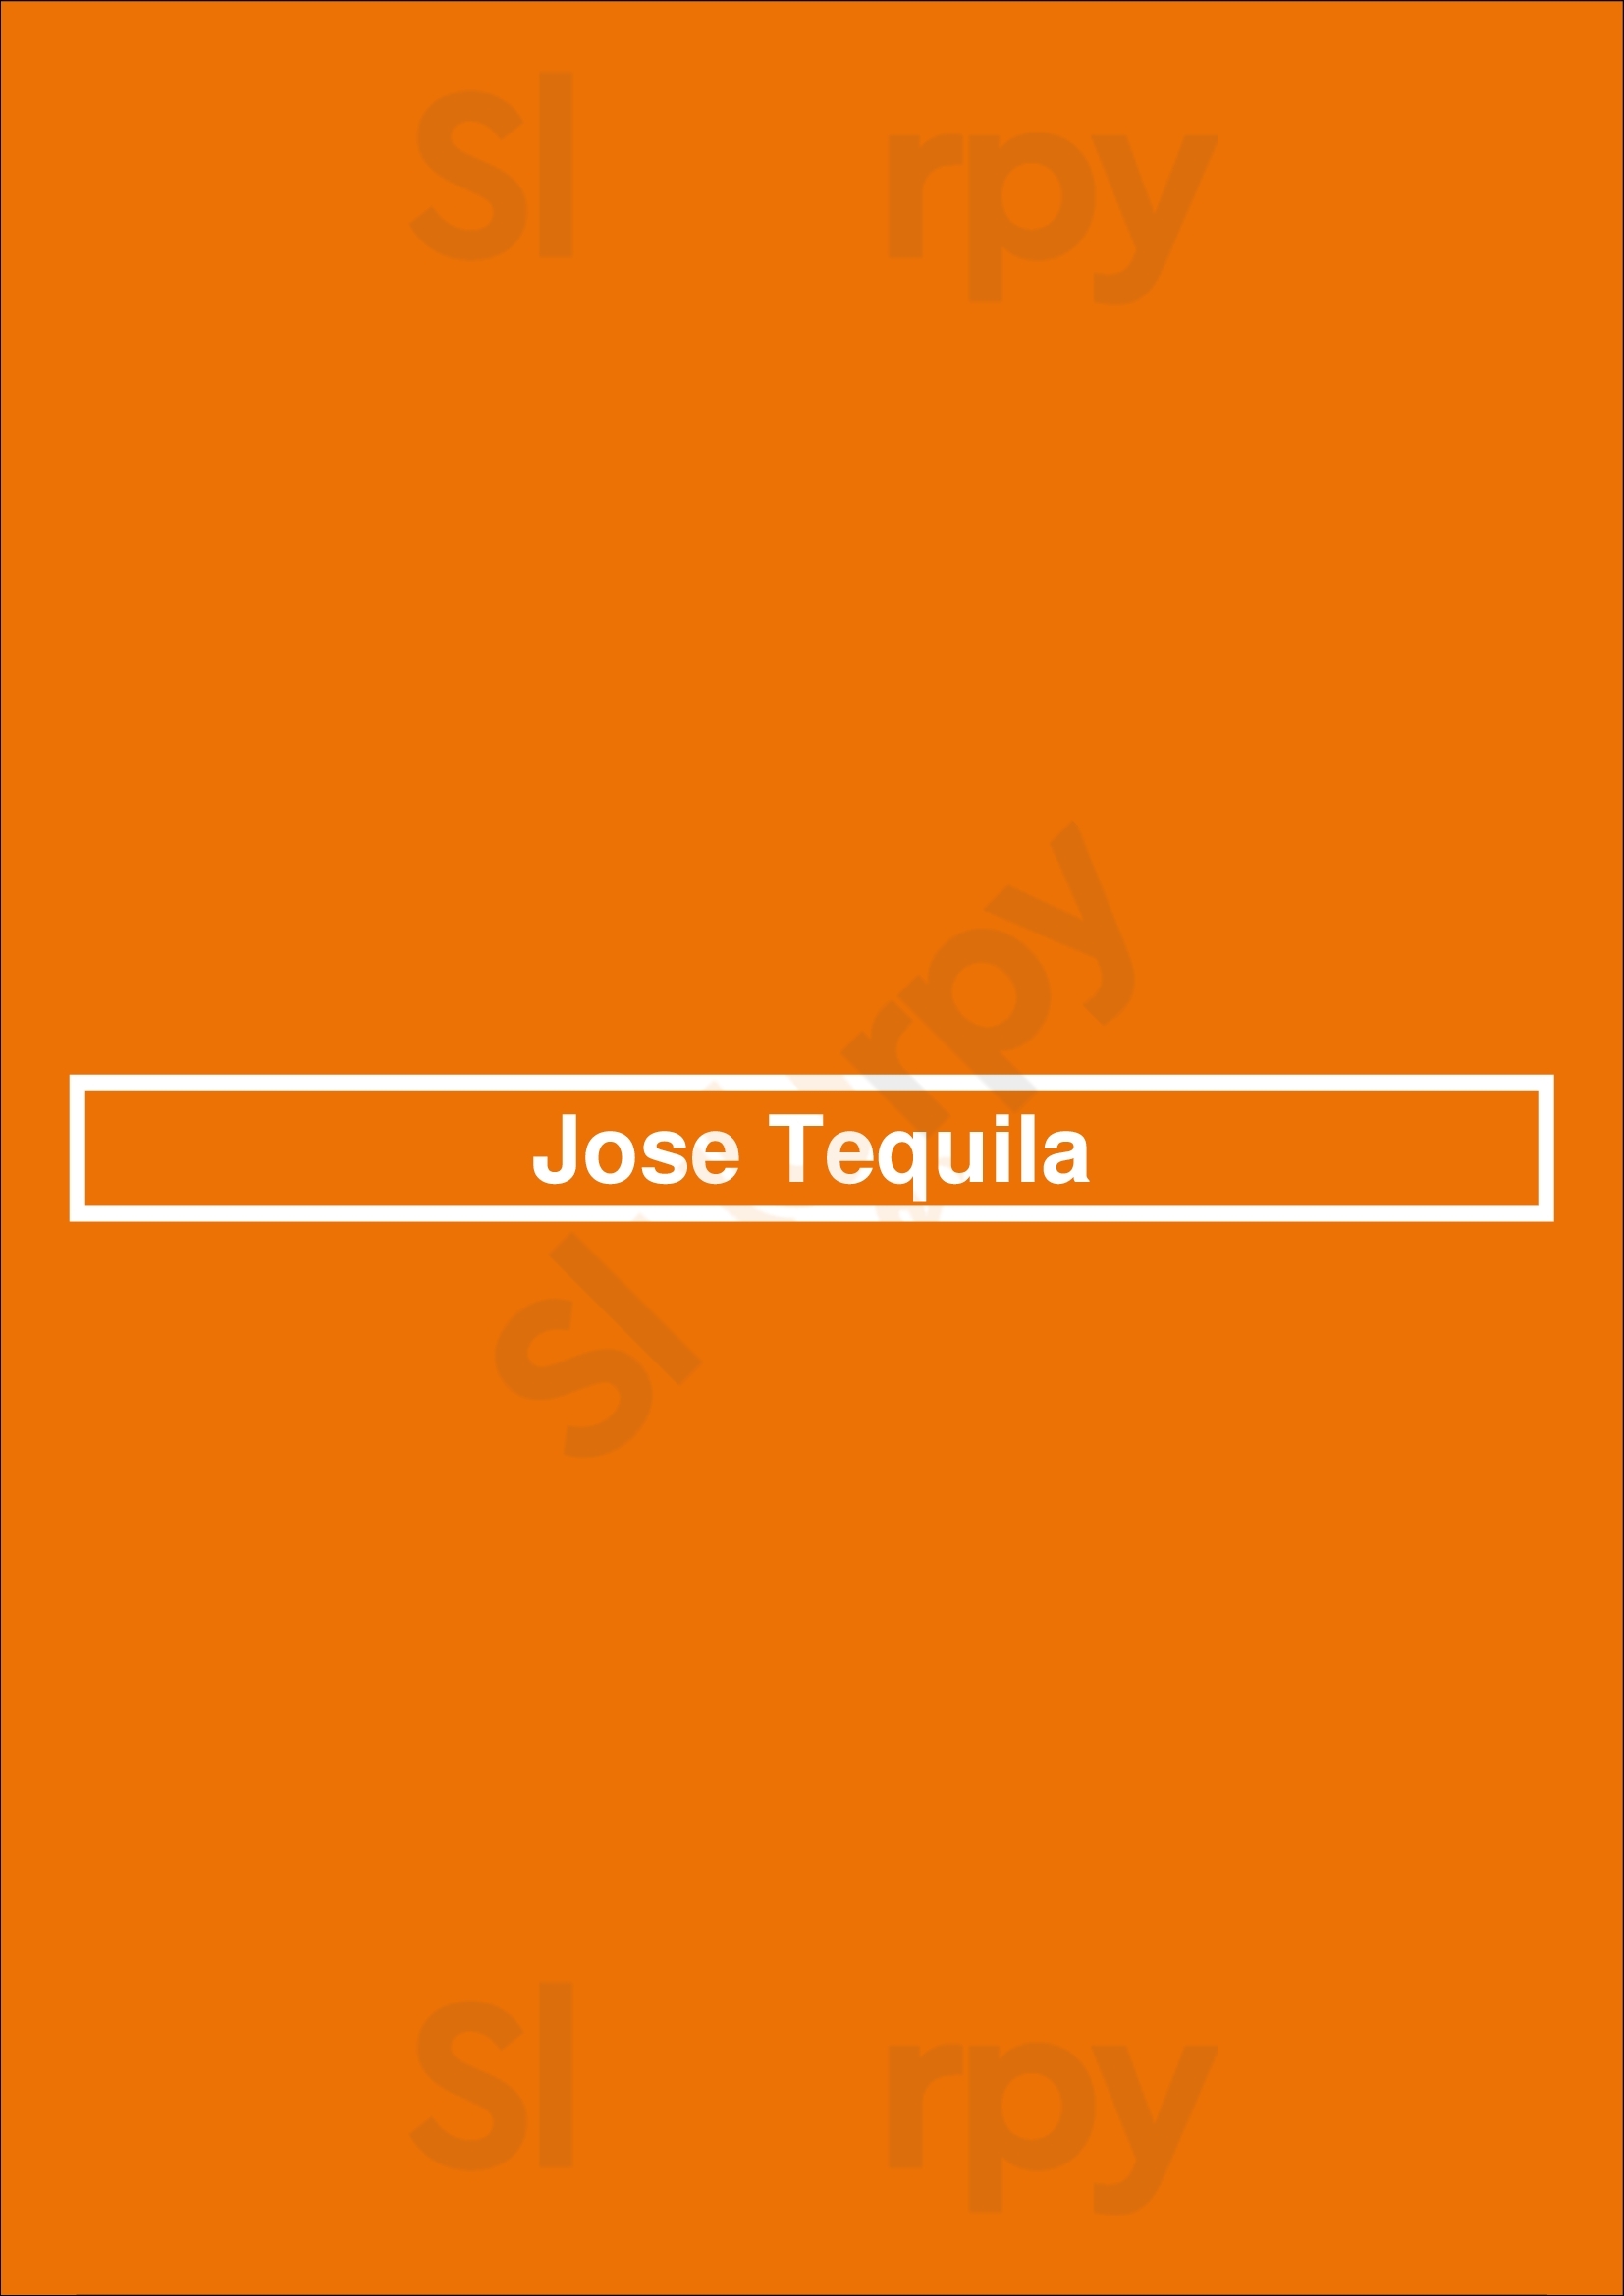 Jose Tequila Virginia Beach Menu - 1